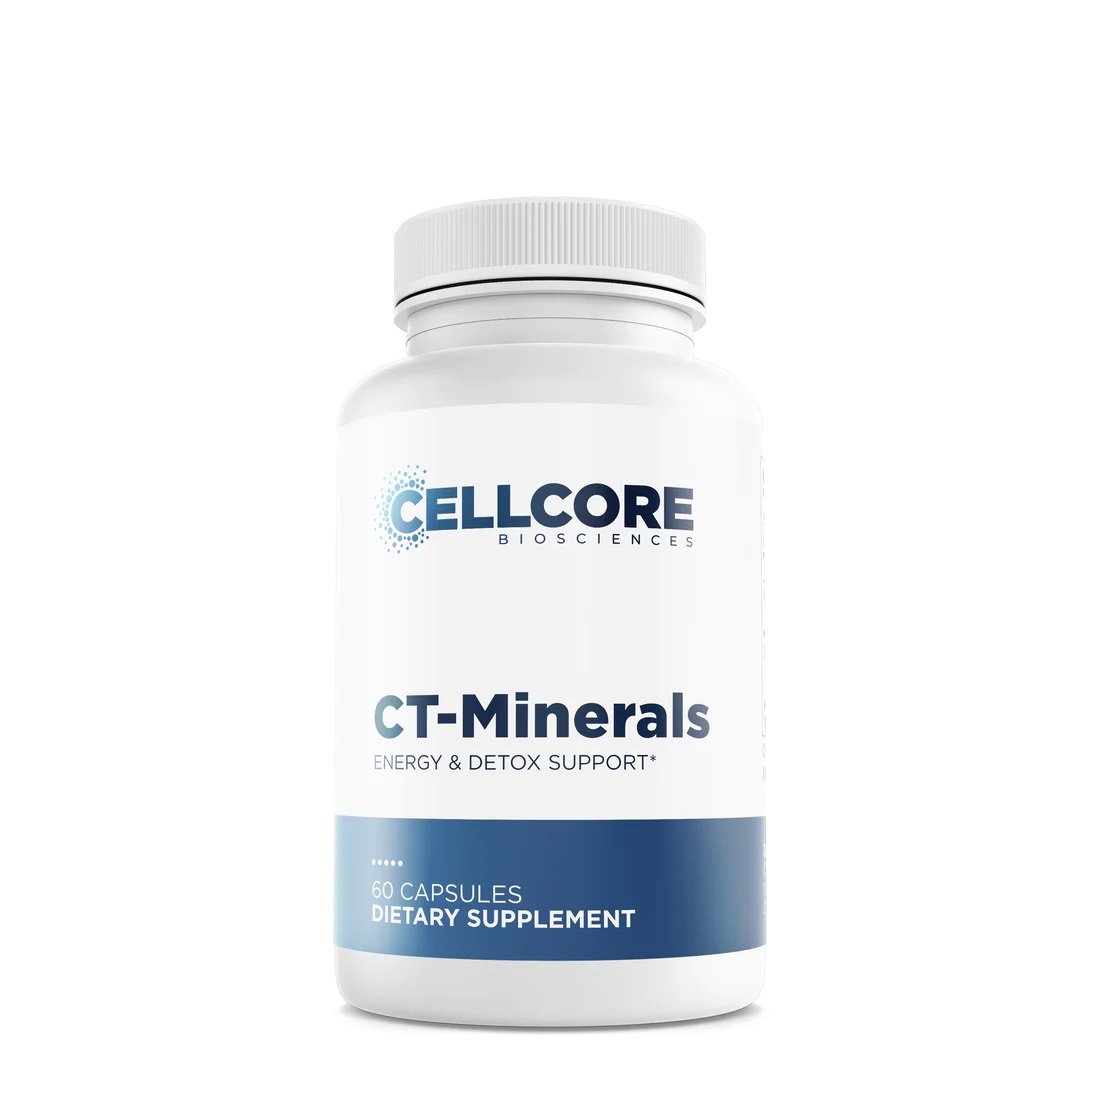 CT-Minerals Capsules Packaging.jpg